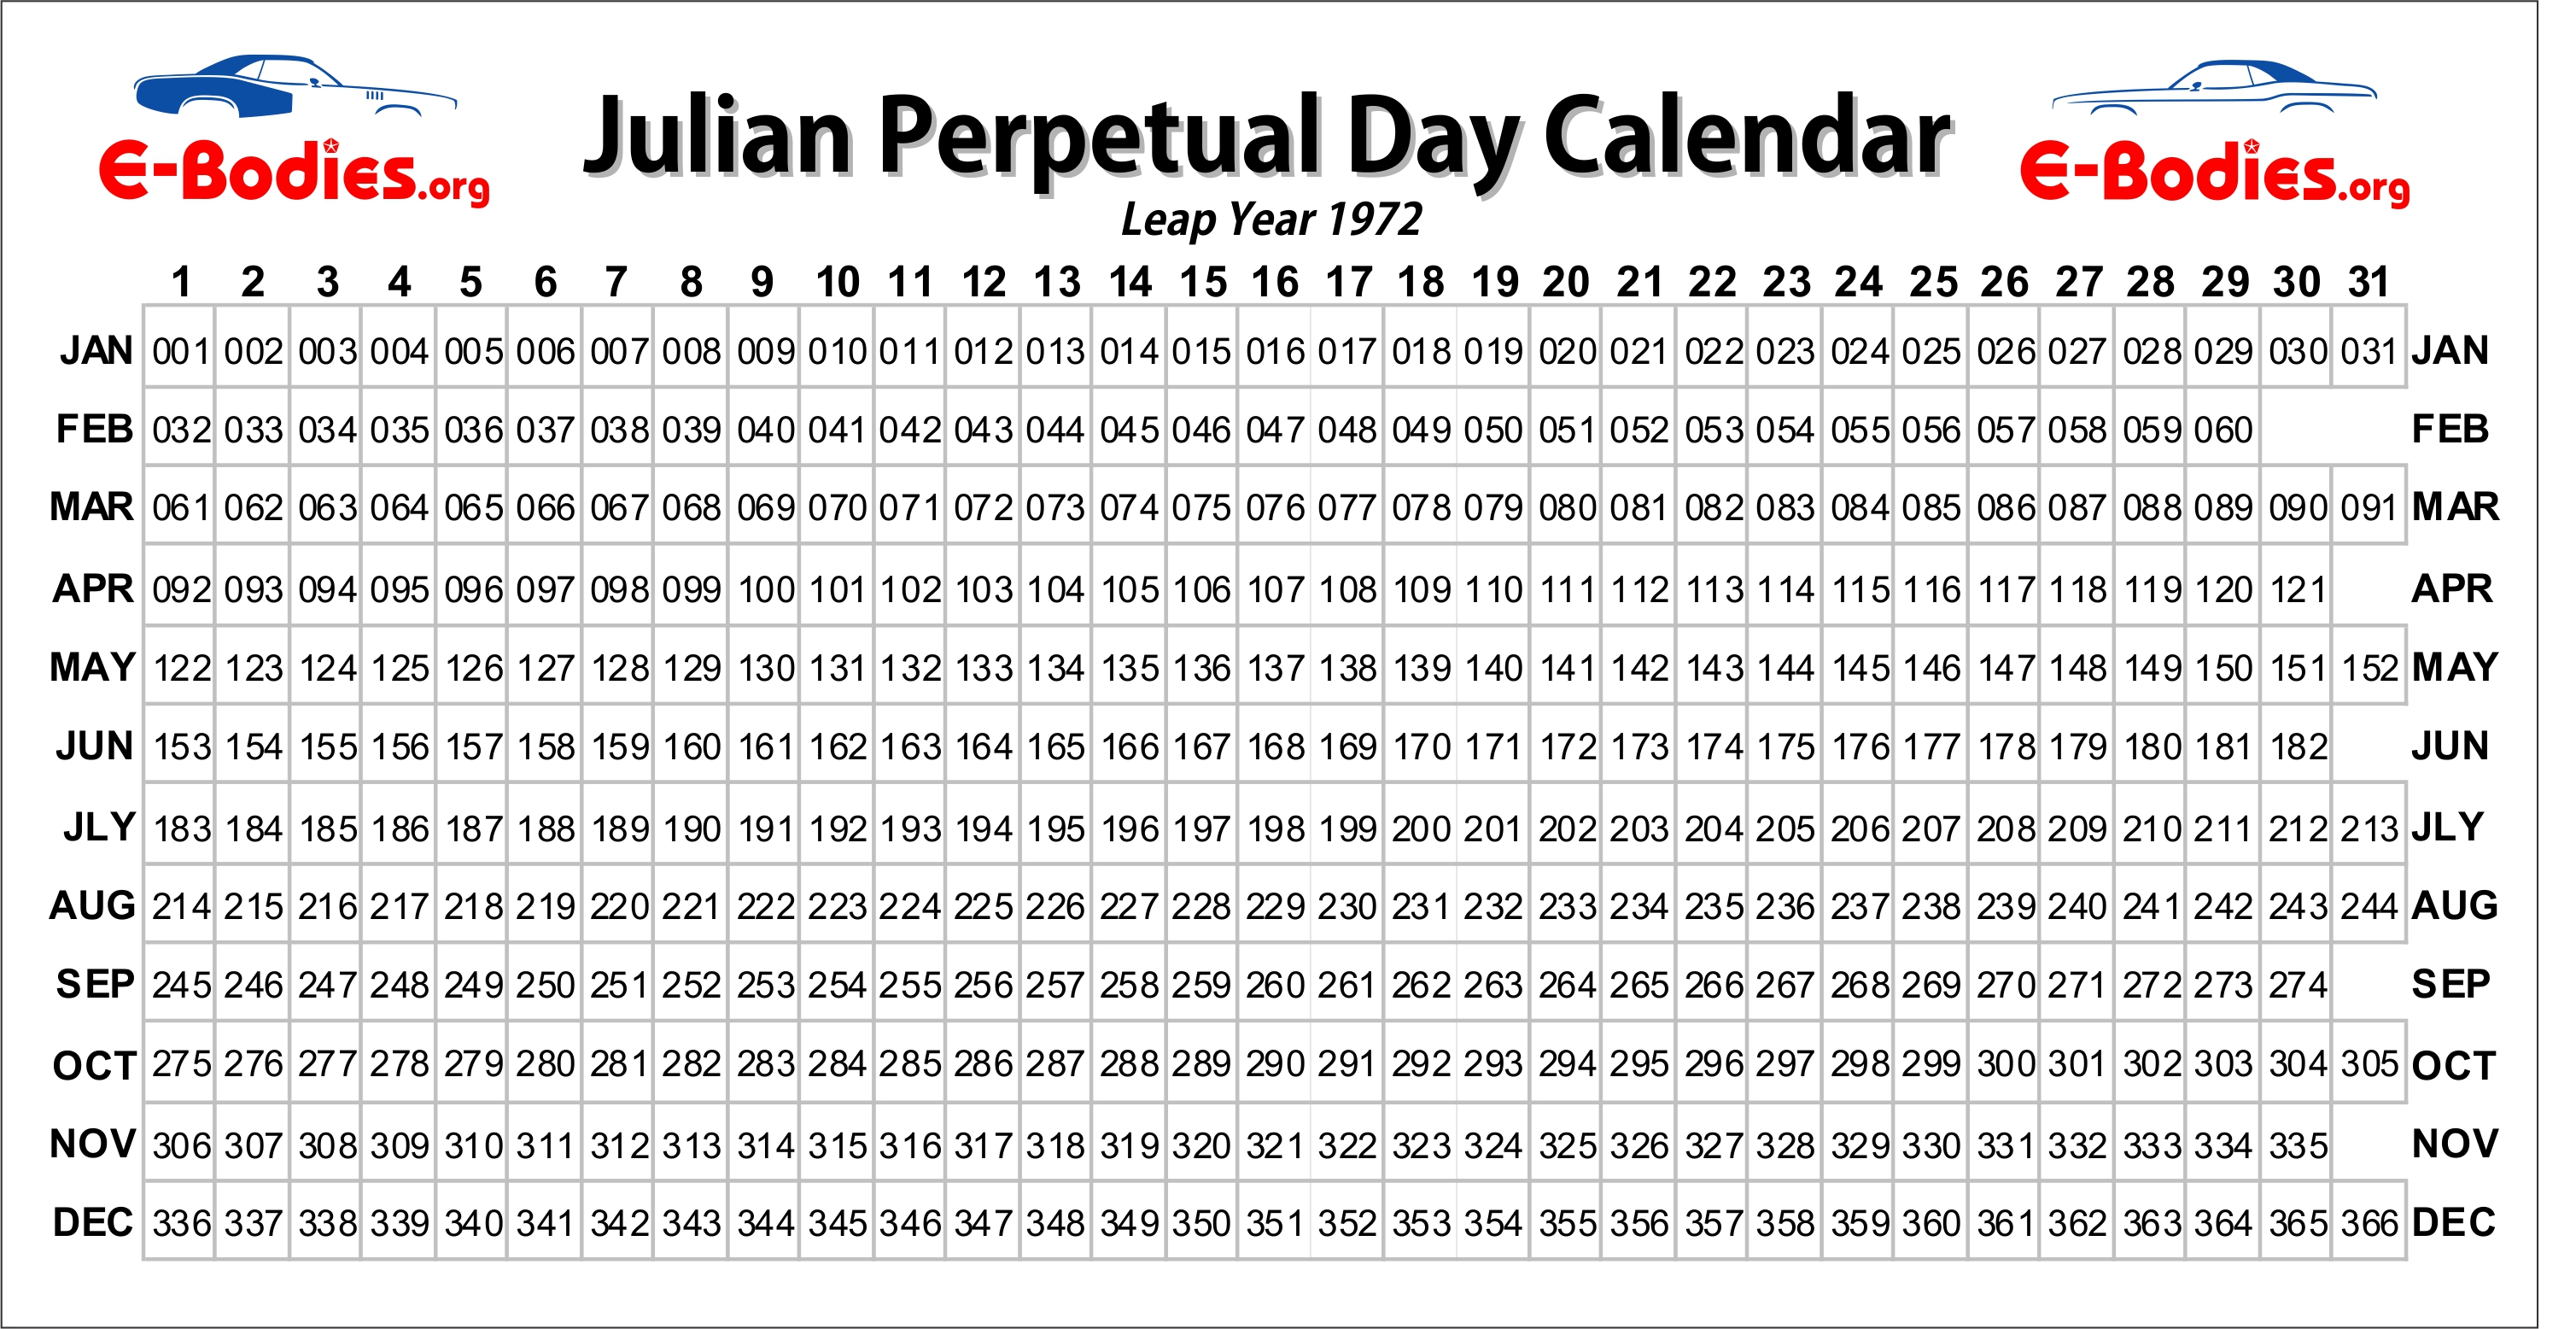 Julian Date Calendar Perpetual And Leap Year - Karla Marline